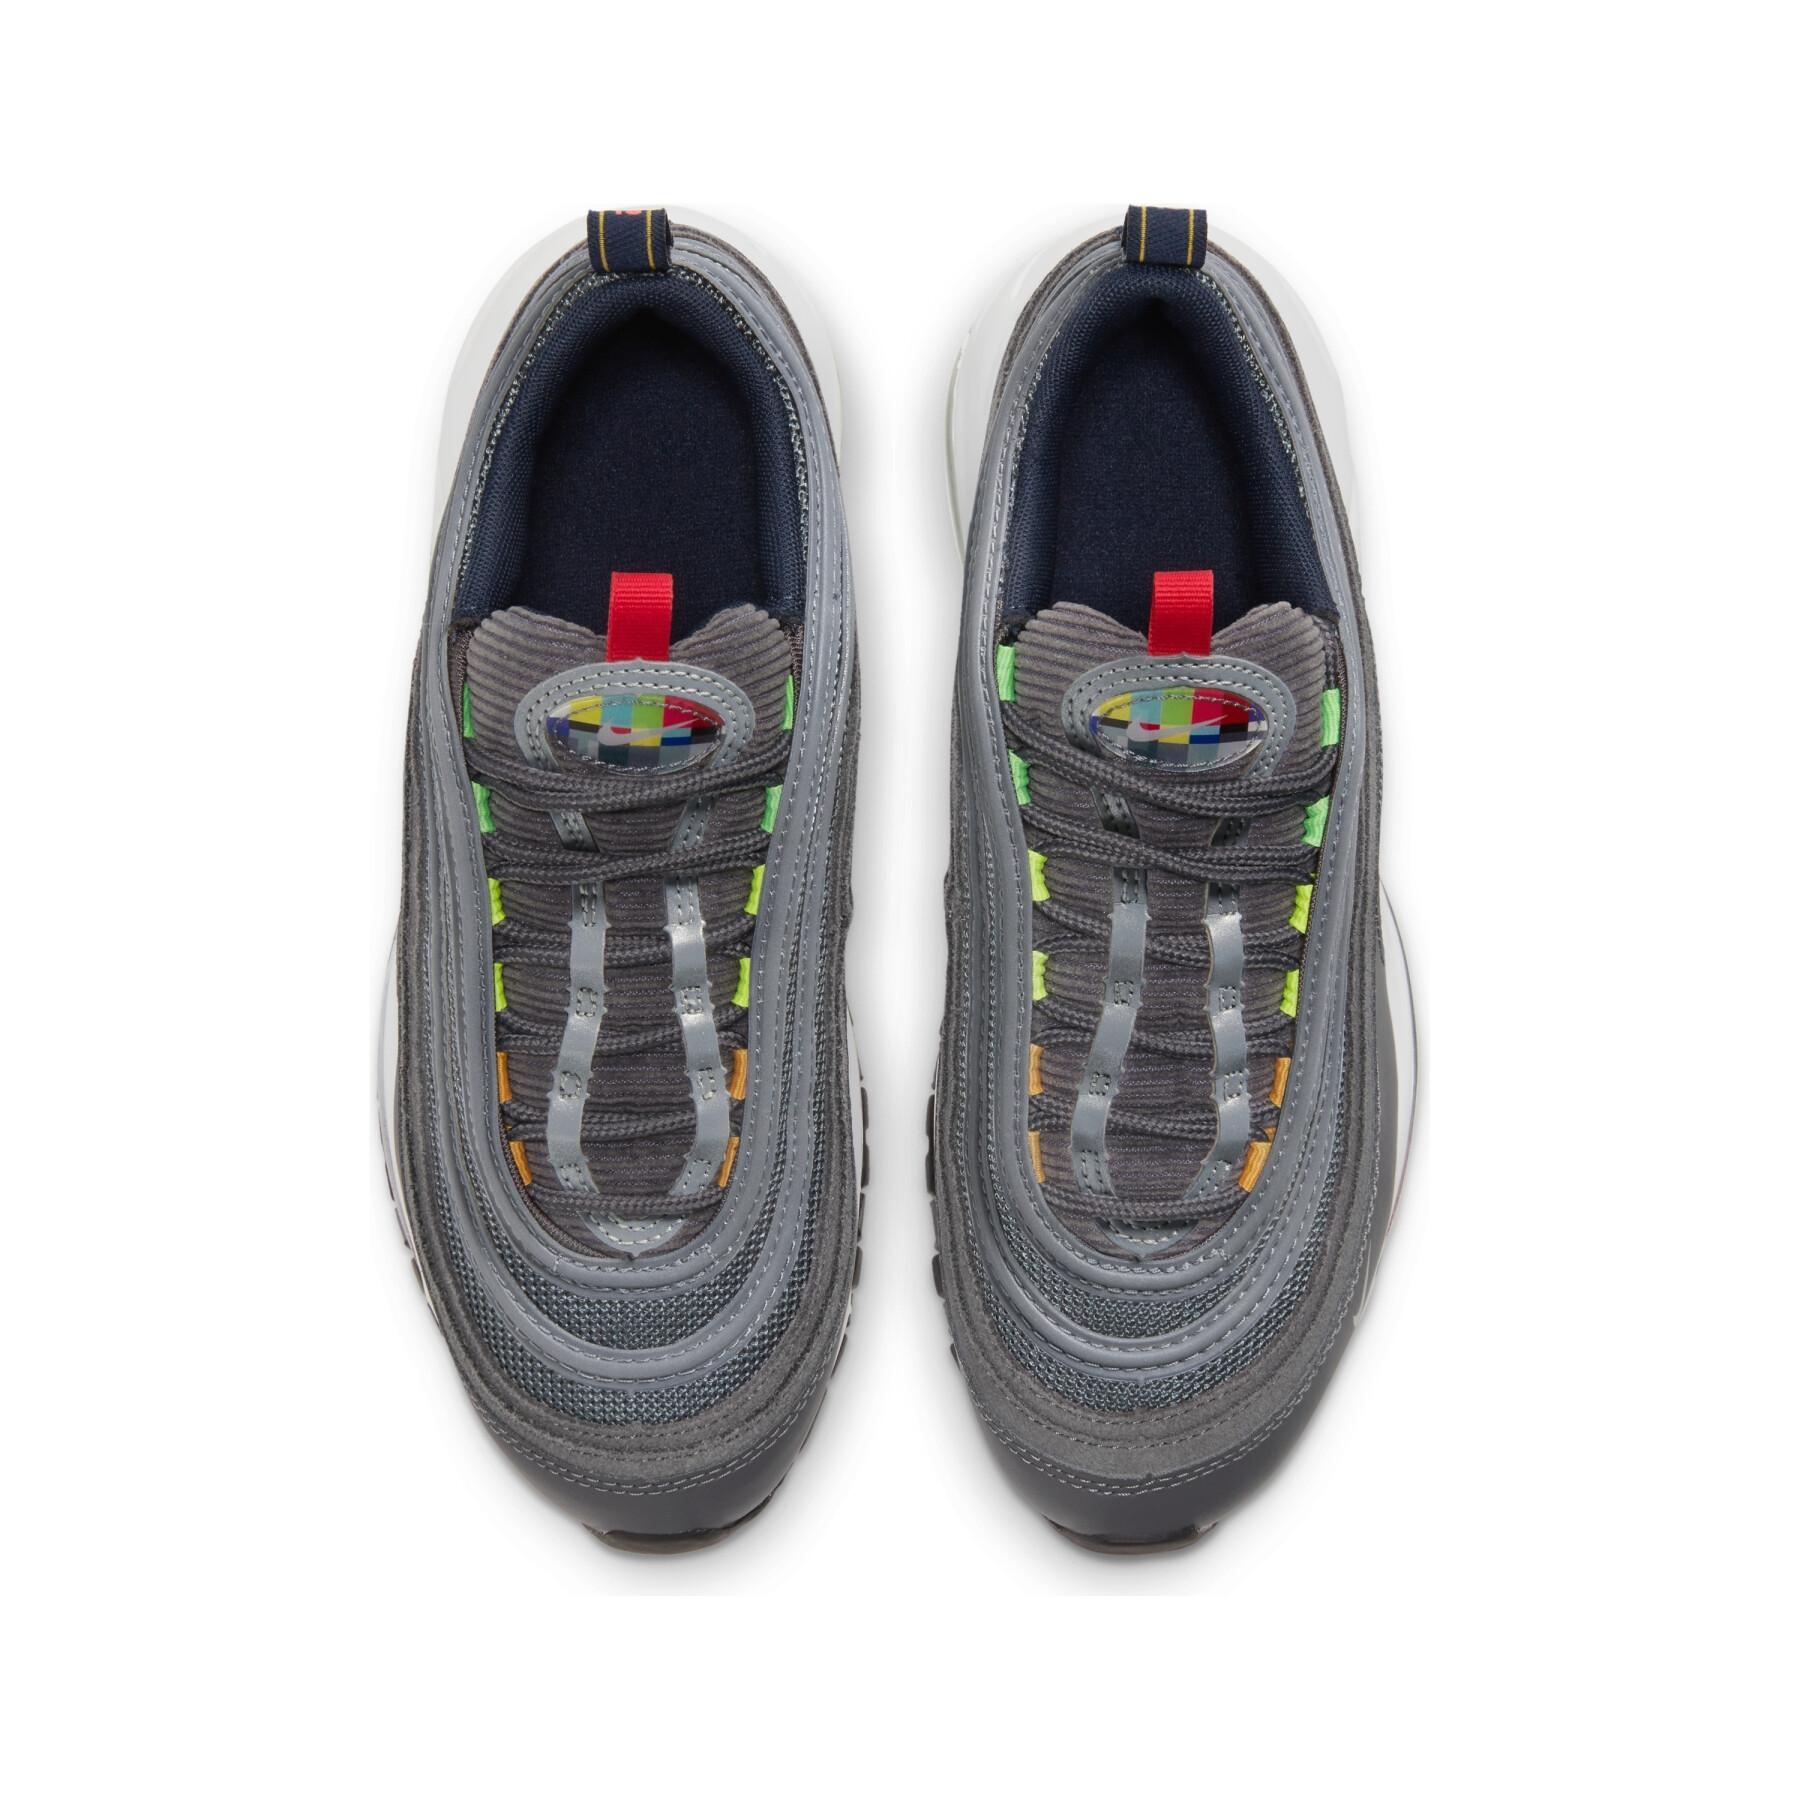 Children's sneakers Nike Air Max 97 Eoi